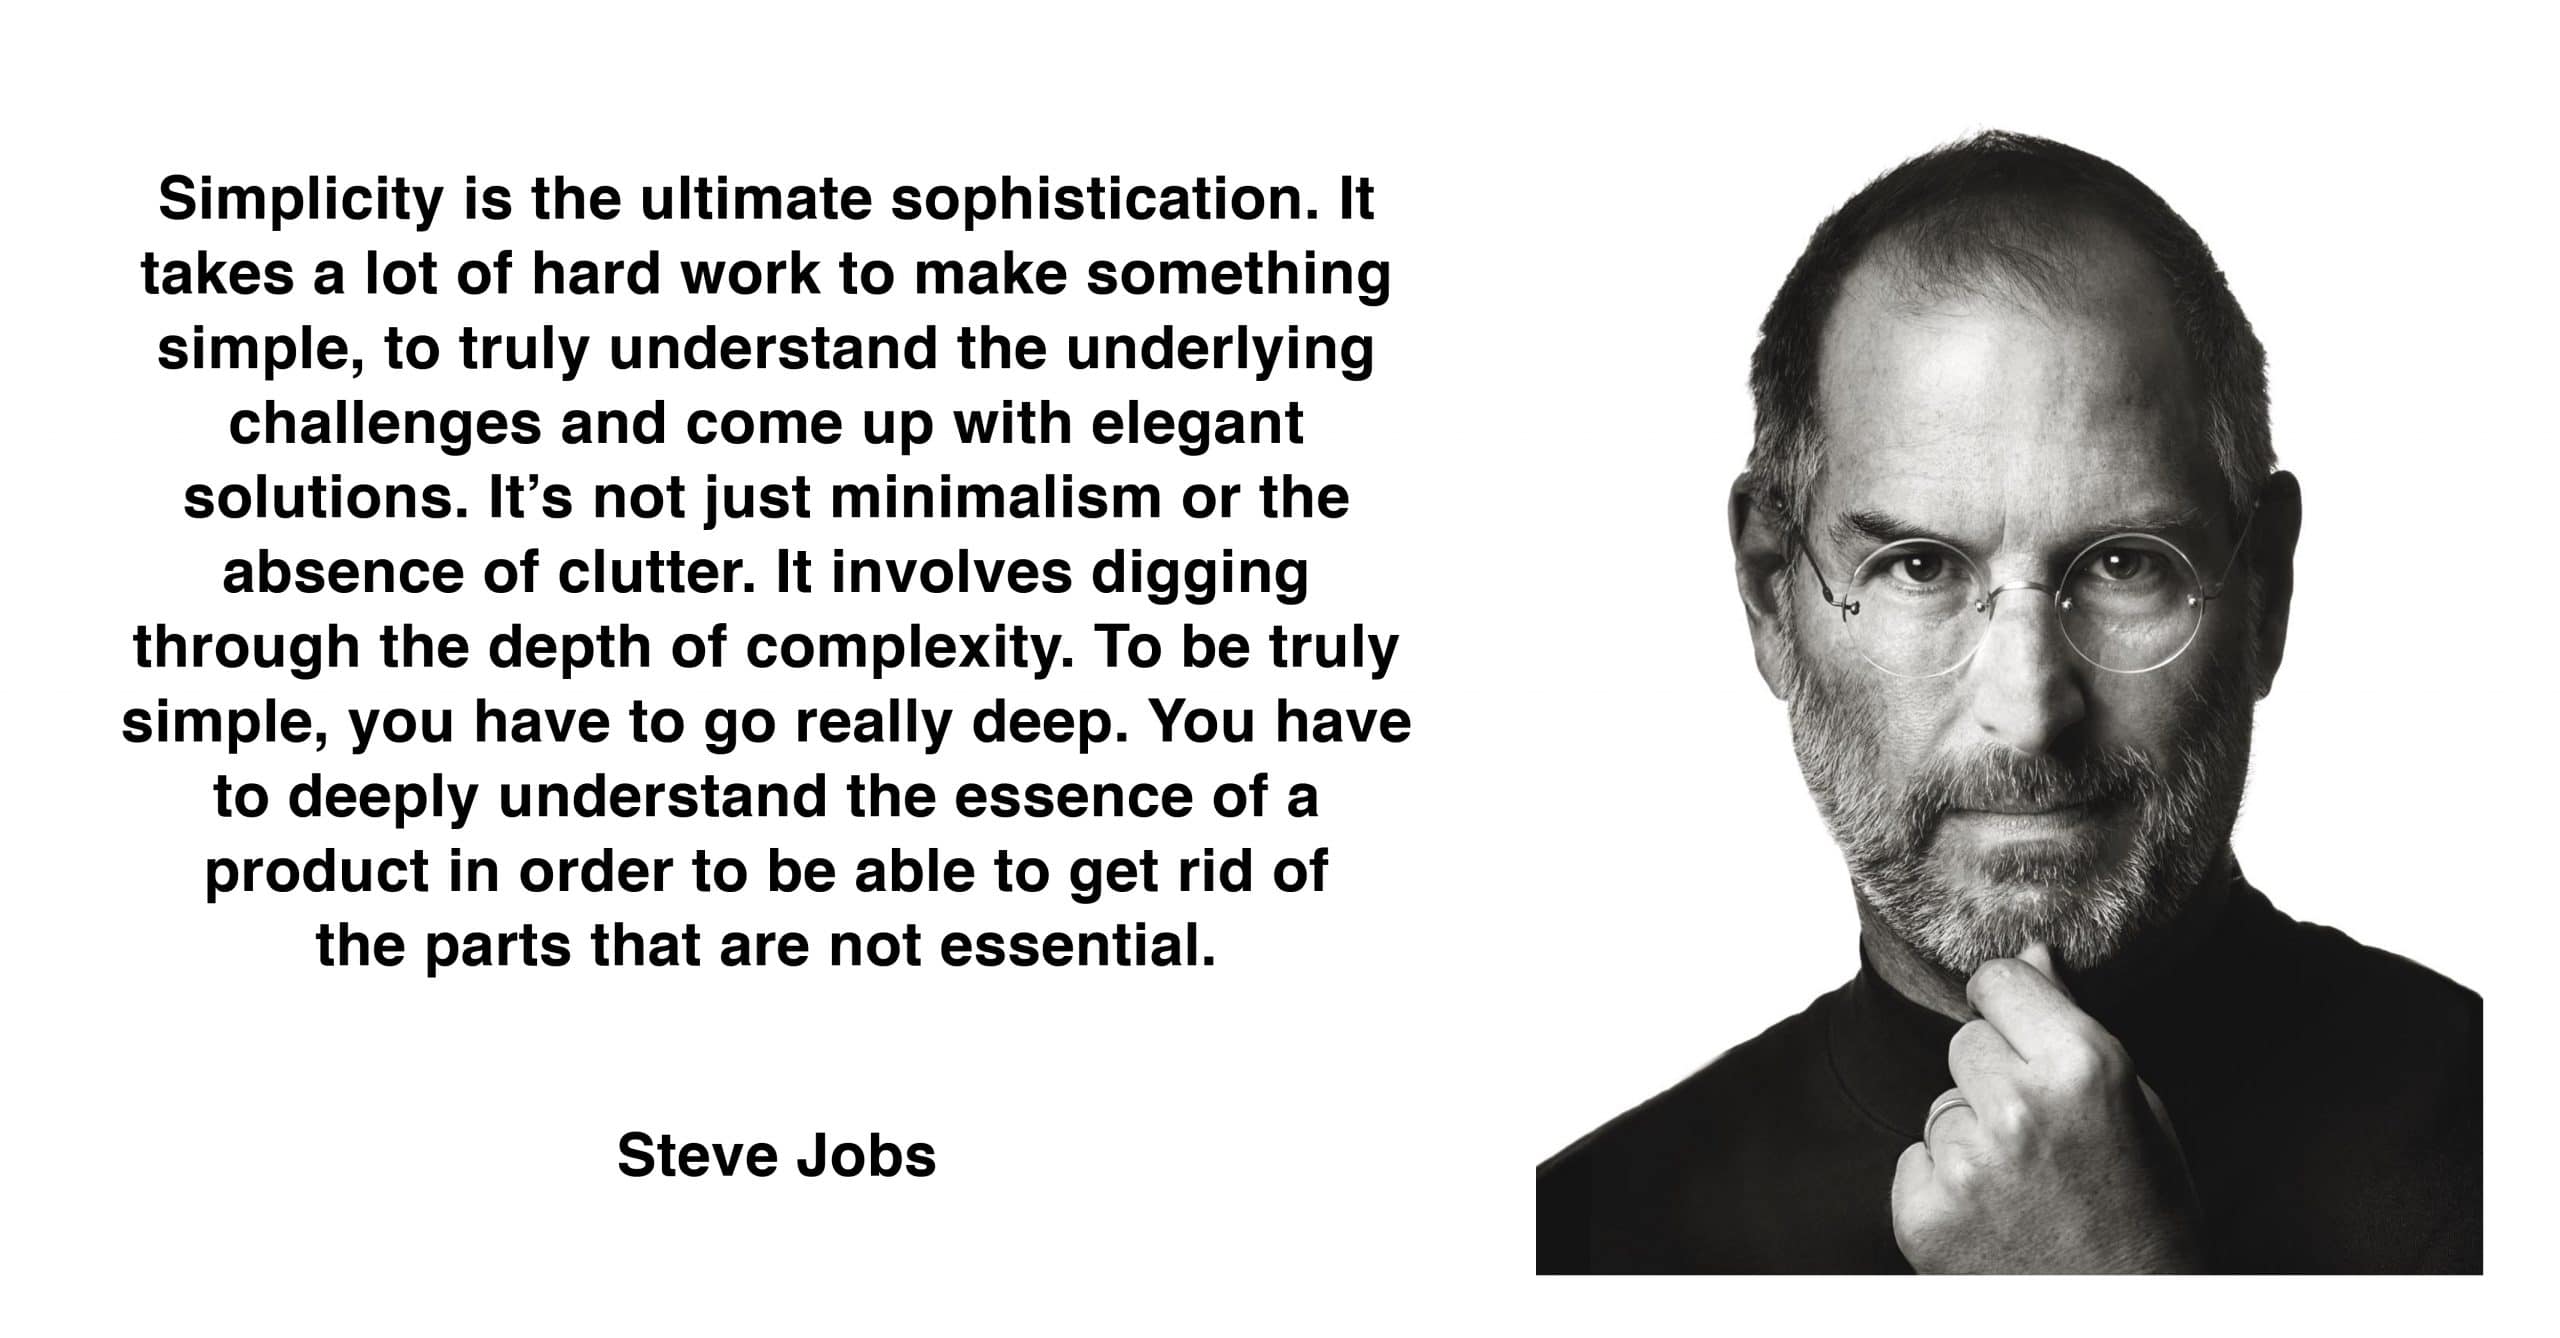 Steve Jobs view on simplicity